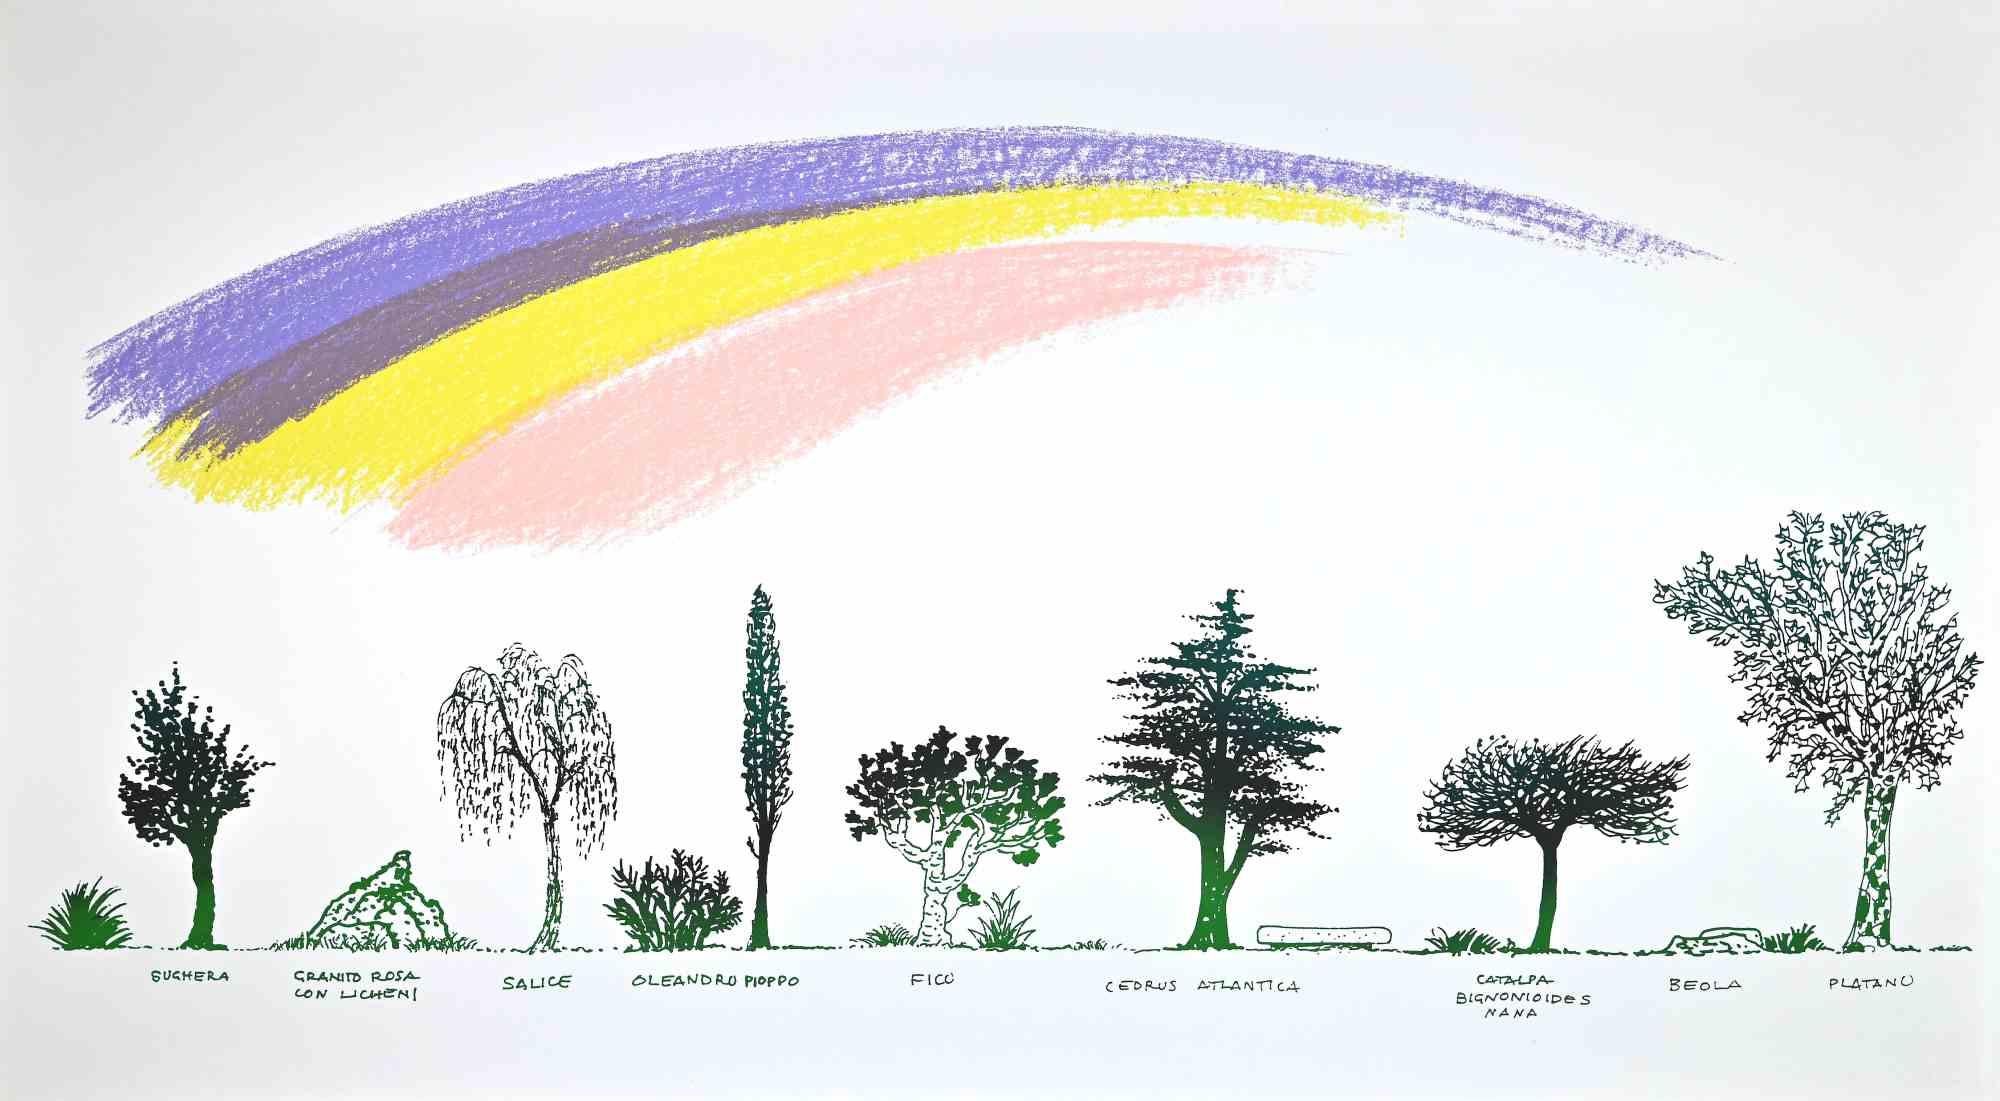 Un Viale di Alberi Diversi - Screen Print by Bruno Munari - 1980s